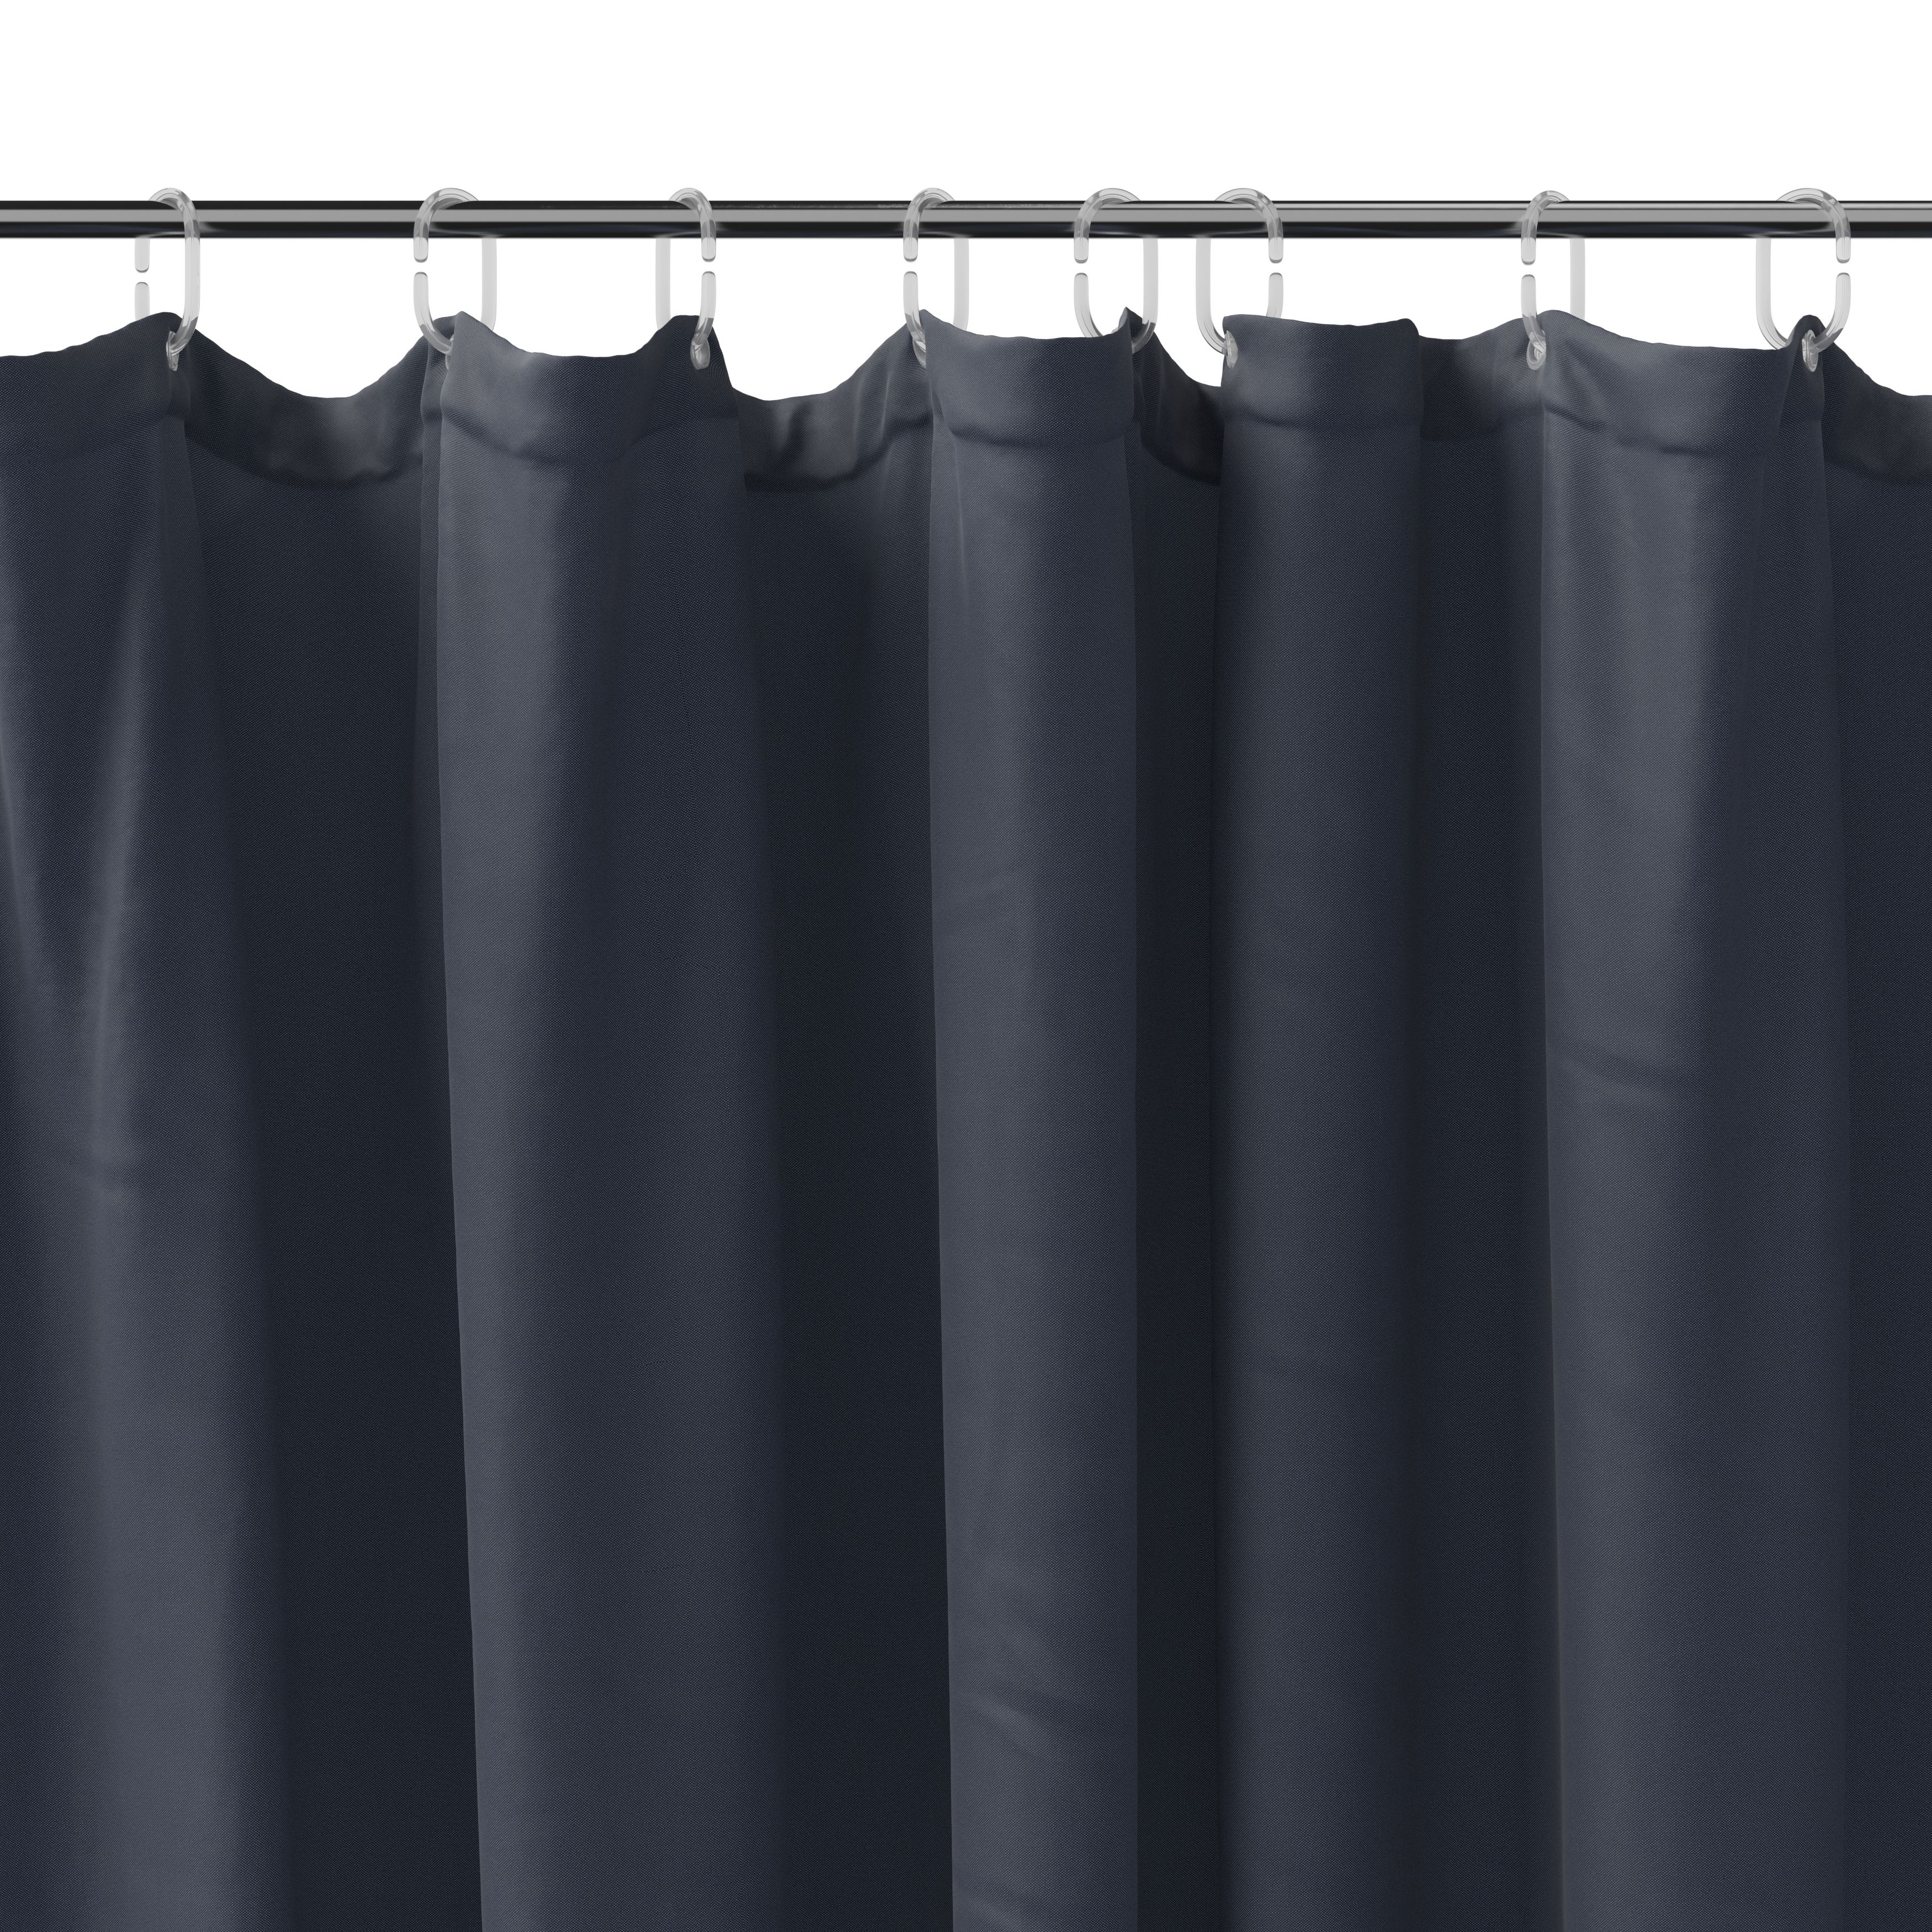 GoodHome Koros Midnight blue Plain Shower curtain (W)180cm